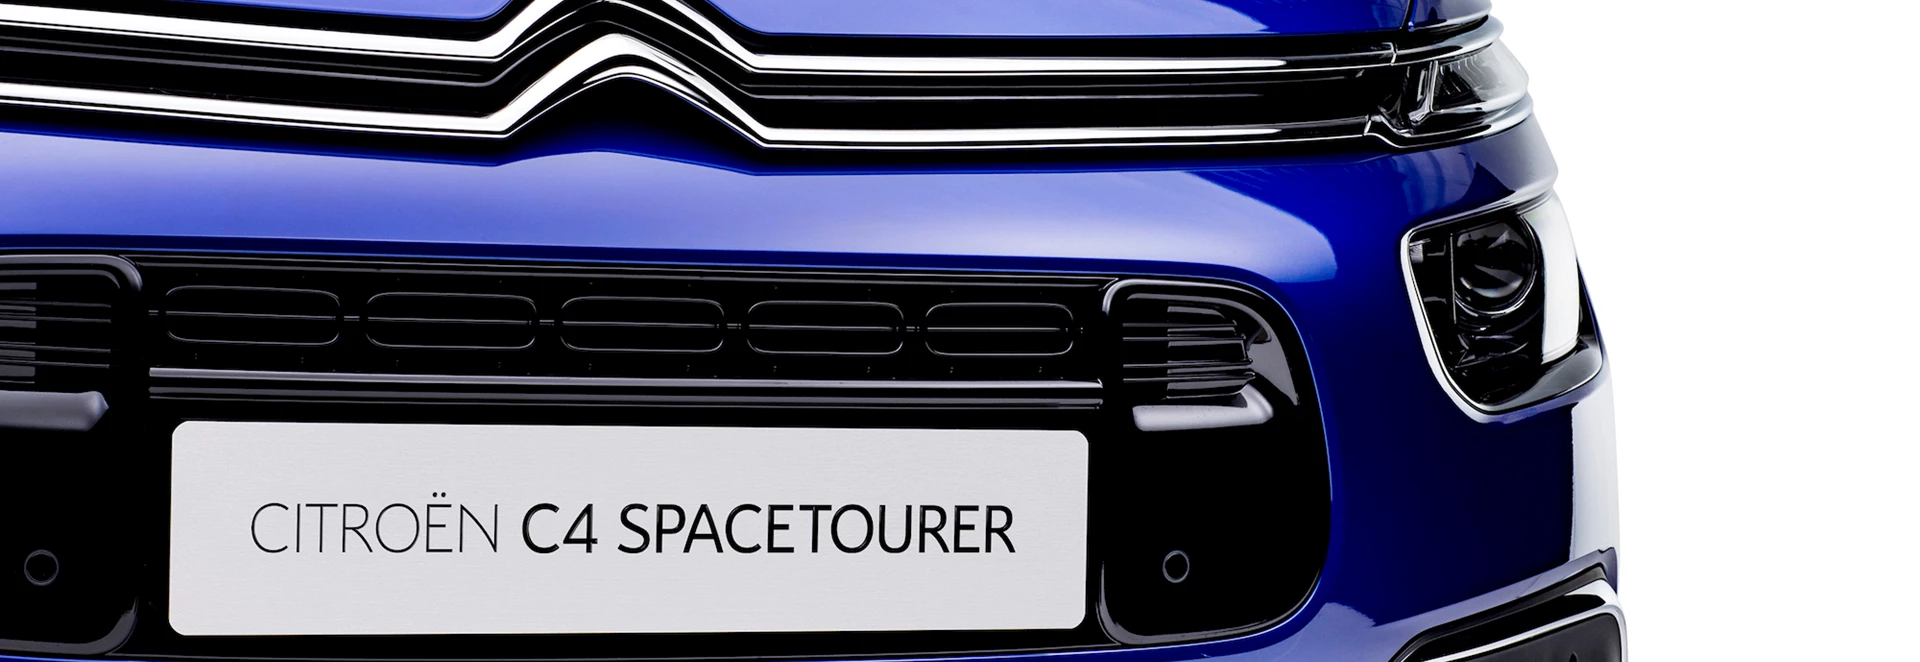 Citroen drops Picasso name for SpaceTourer